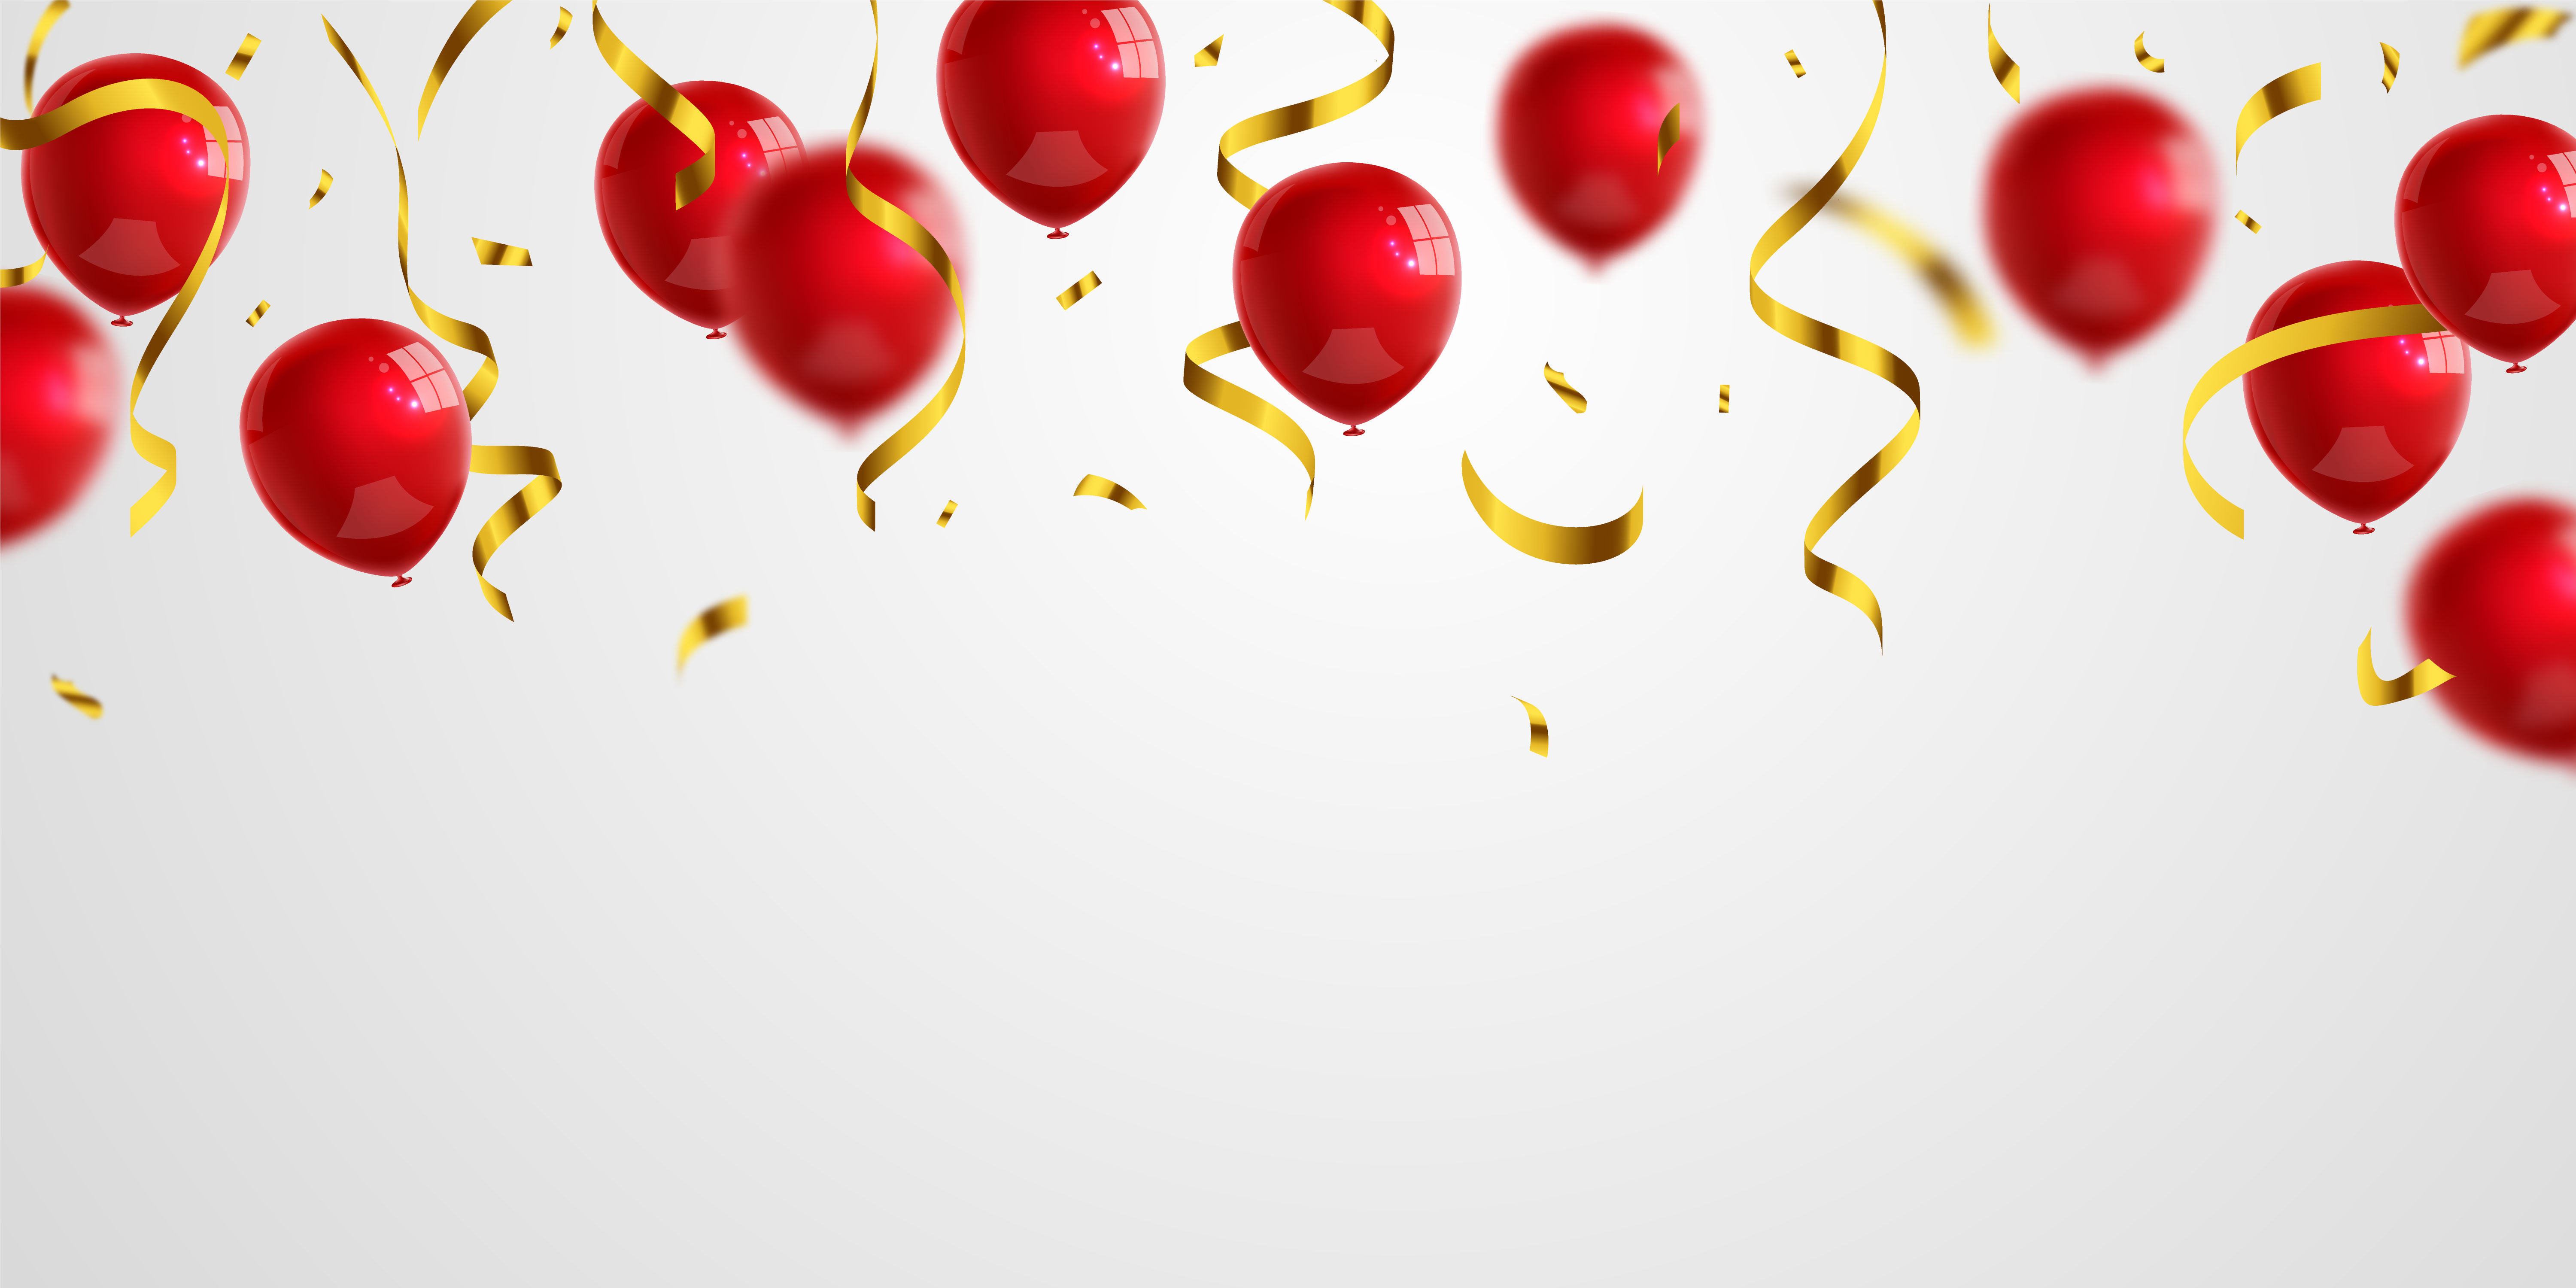 Festive Background Red White Balloons Confetti: vector de stock